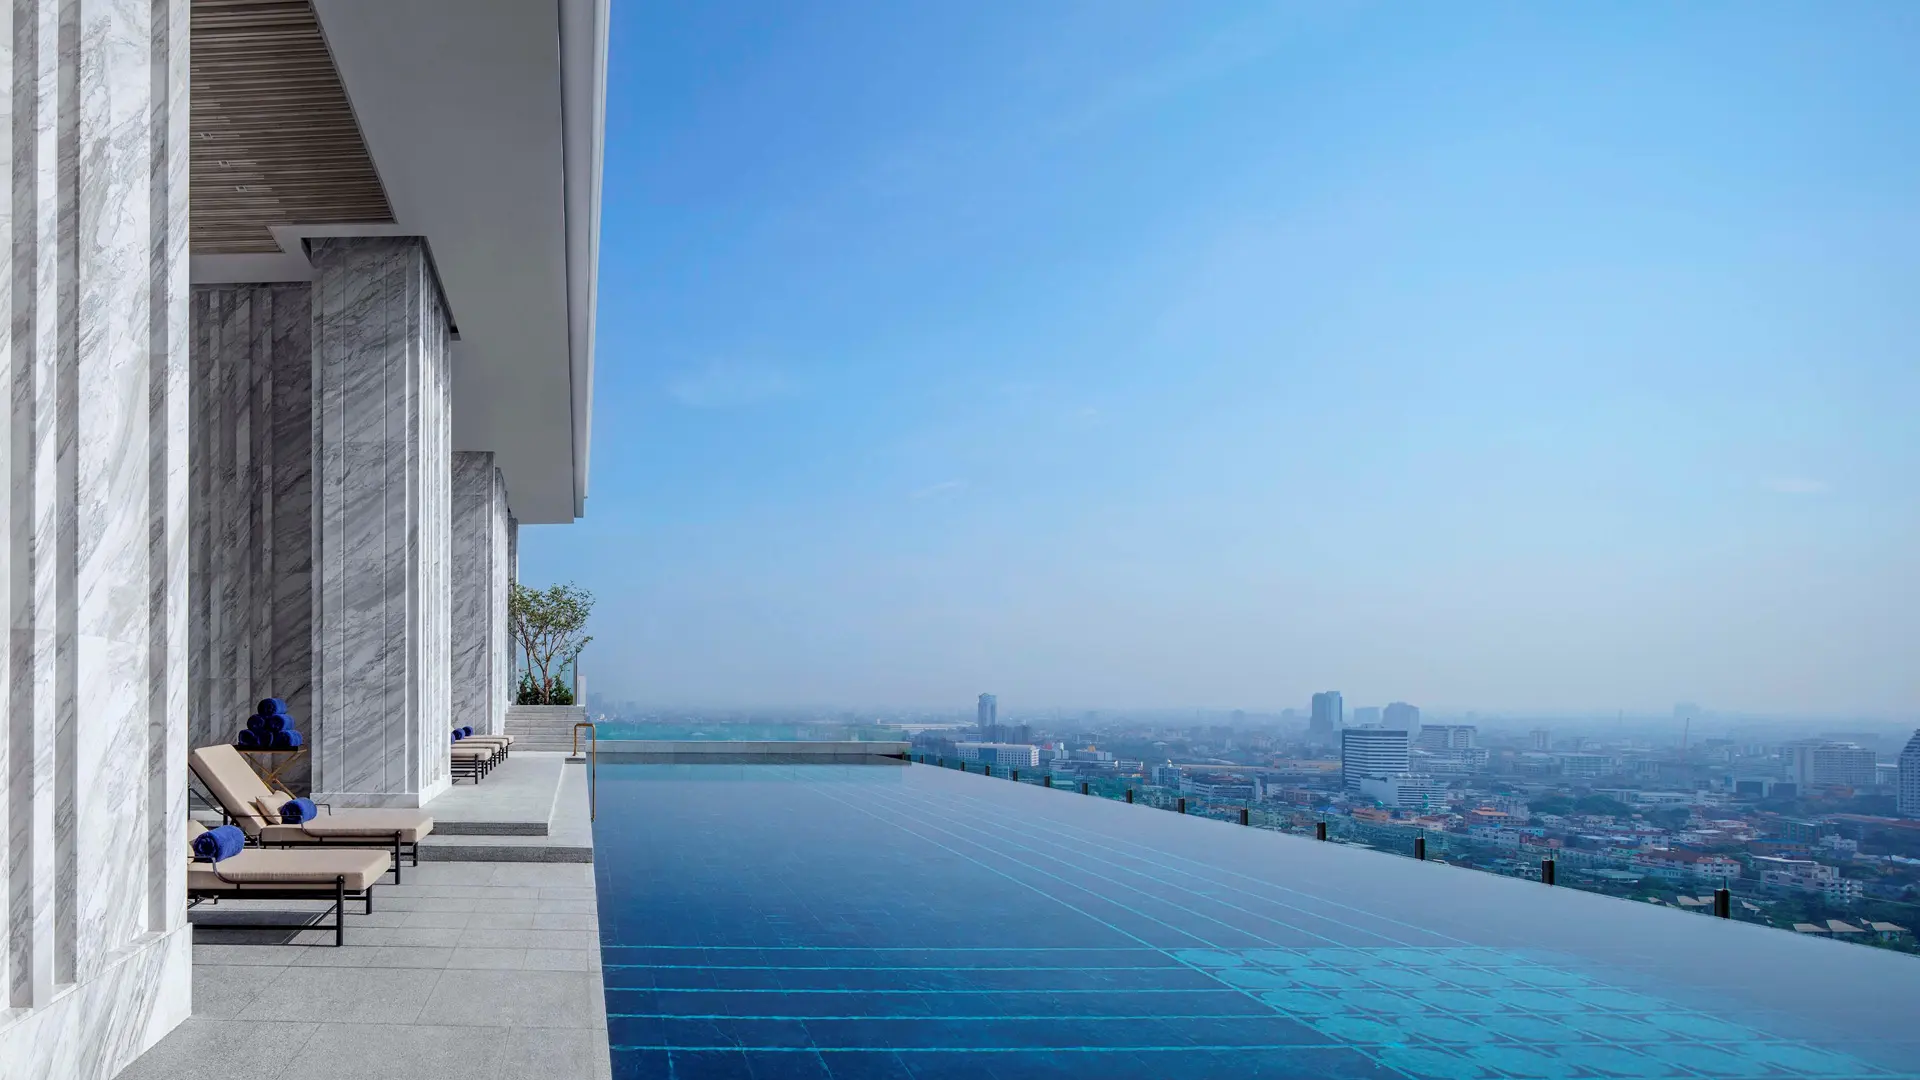 Hotel review Service & Facilities' - 137 Pillars Suites Bangkok - 0